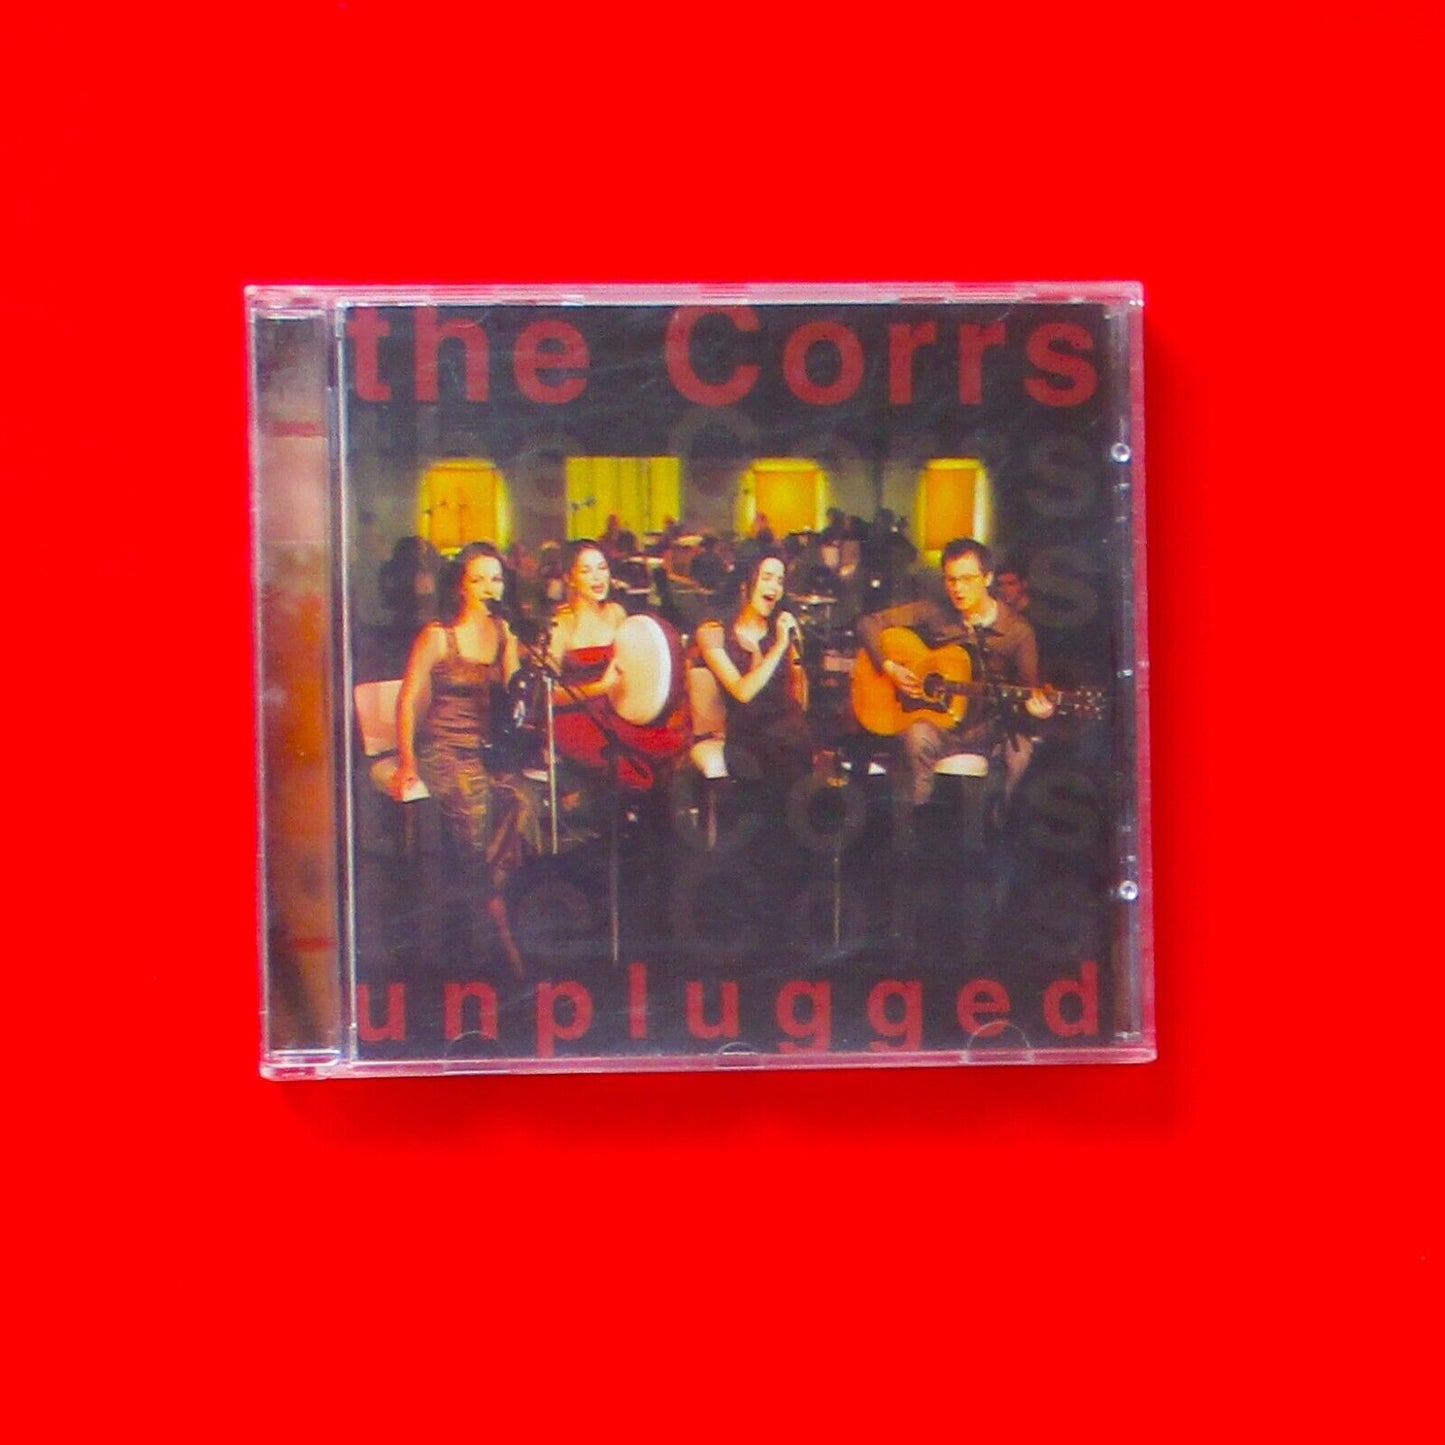 The Corrs ‎Unplugged 1999 CD Album